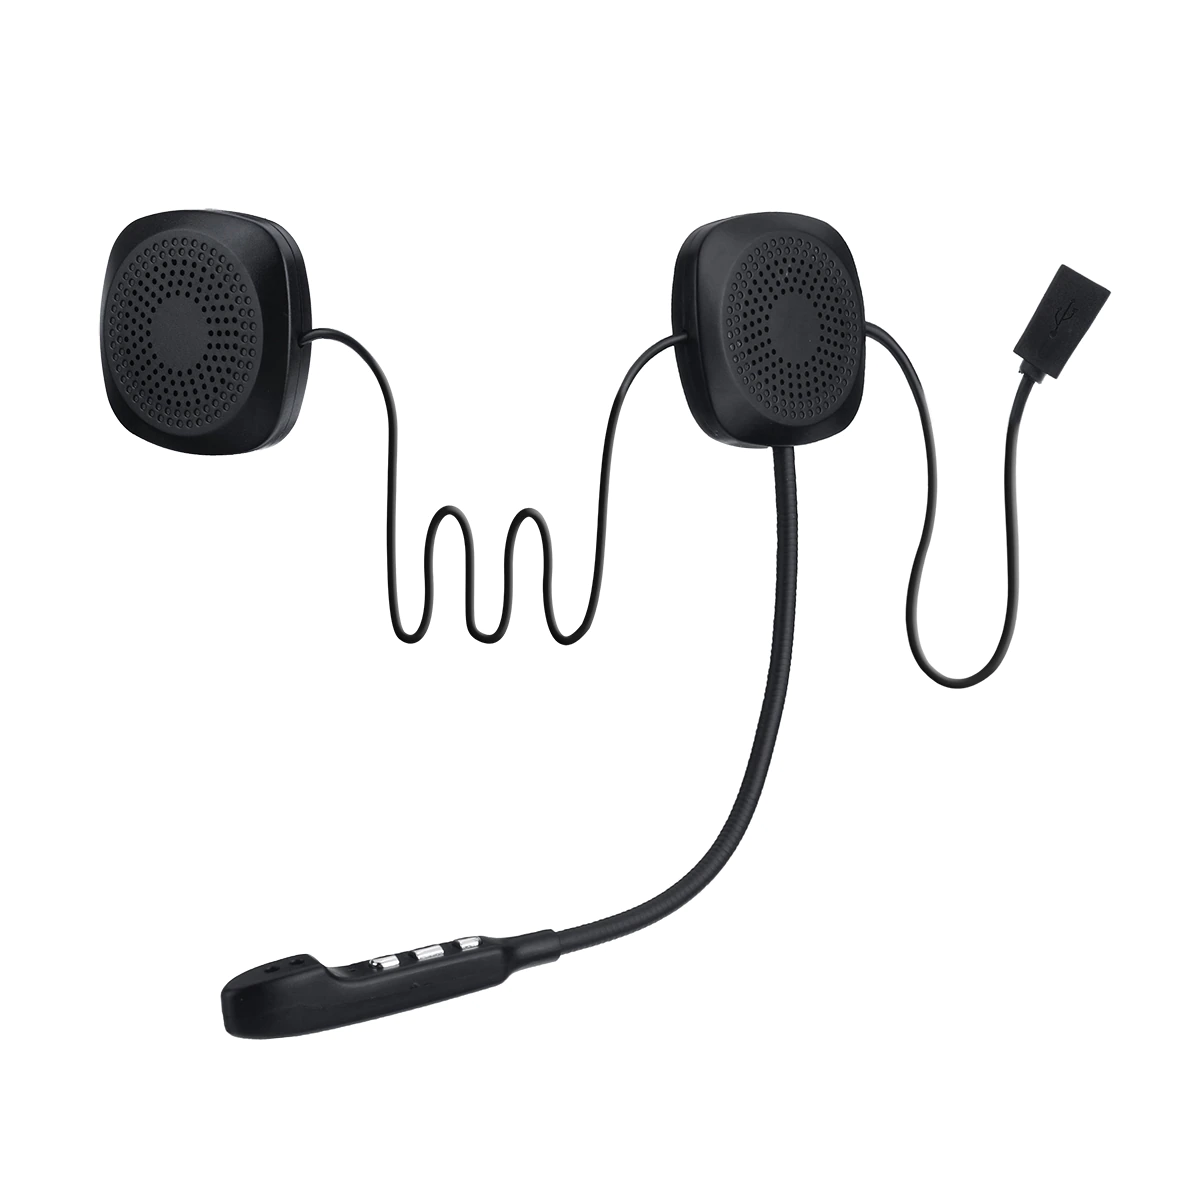 Audew Helmet Headset V4.2-Intercom Moto Bluetooth Hands-Free Waterproof Wireless Anti-Interference